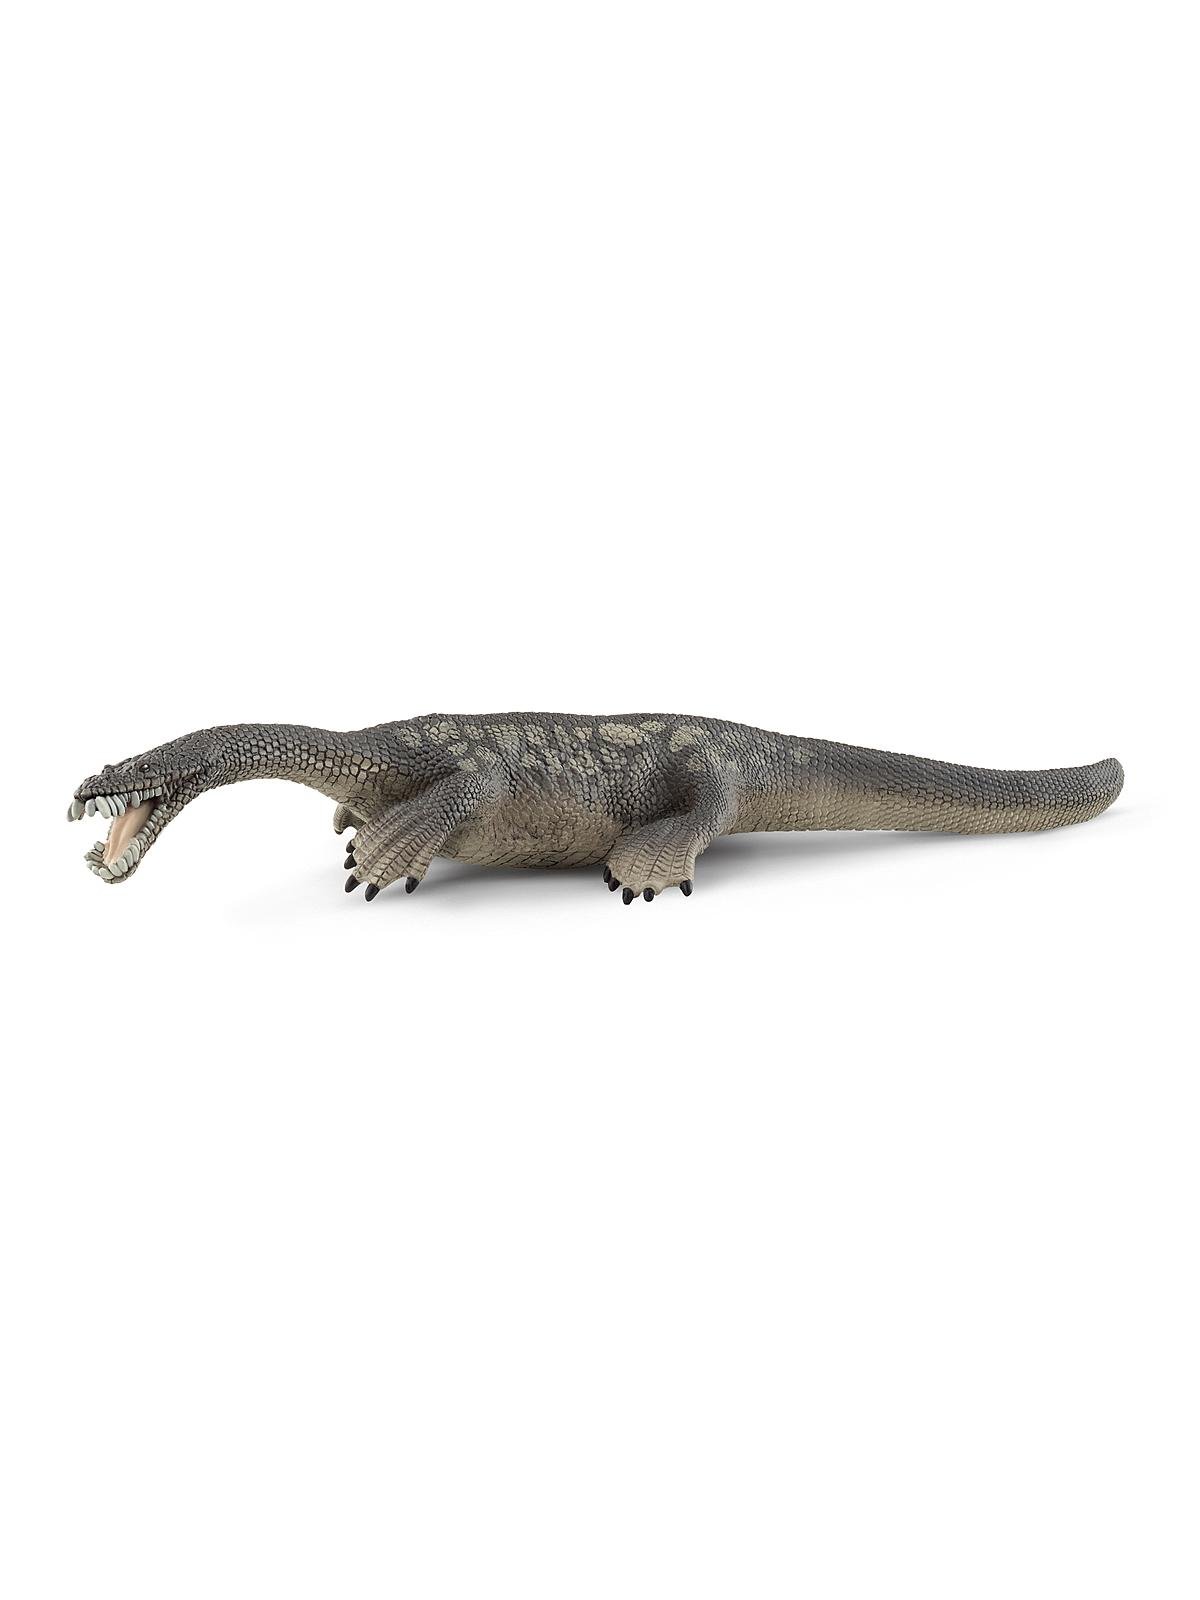 Nothosaurus